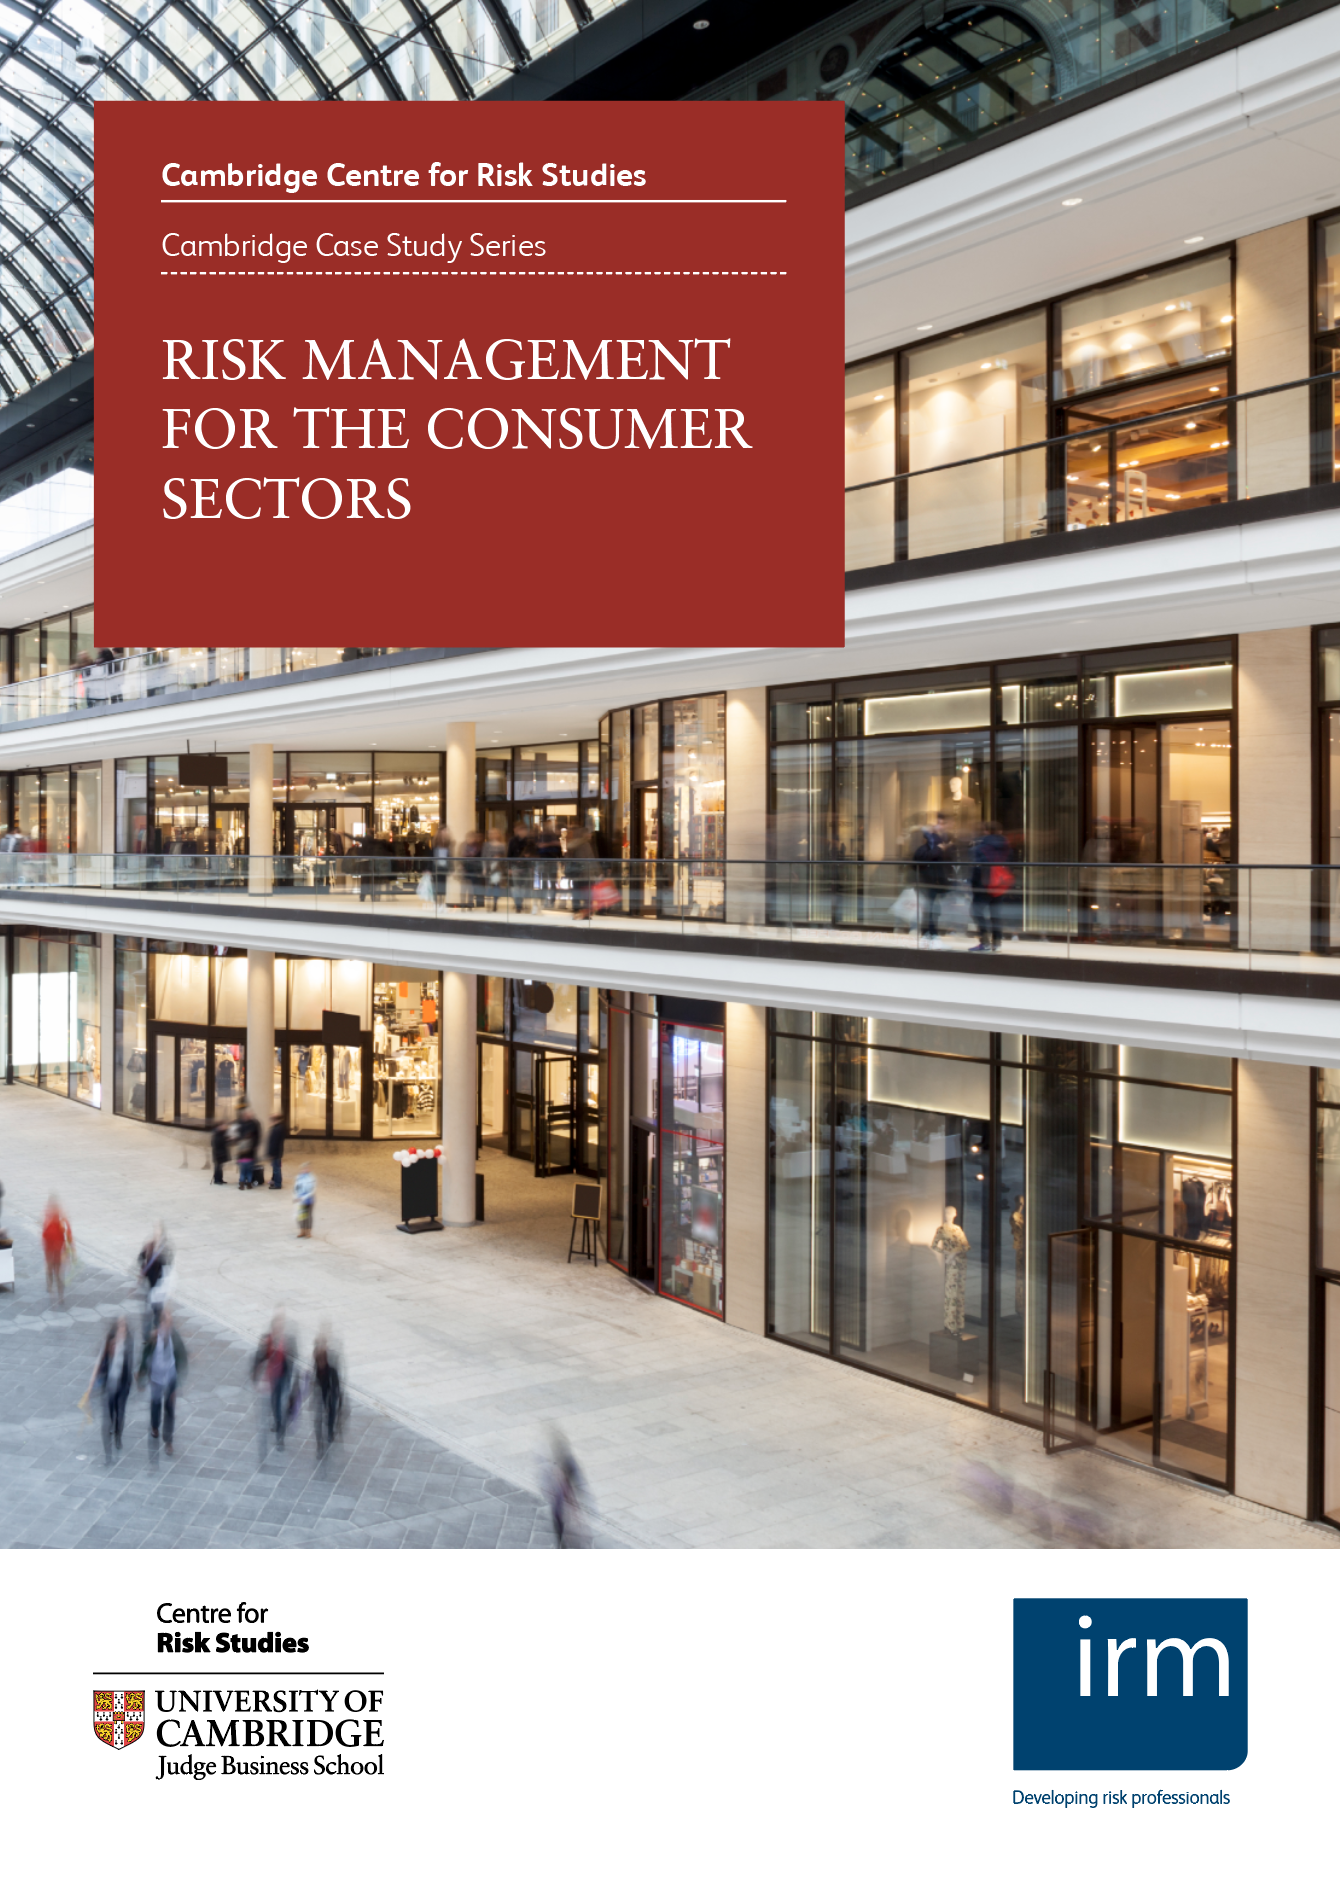 Cambridge Risk Report - Risk Management for the Consumer Sectors